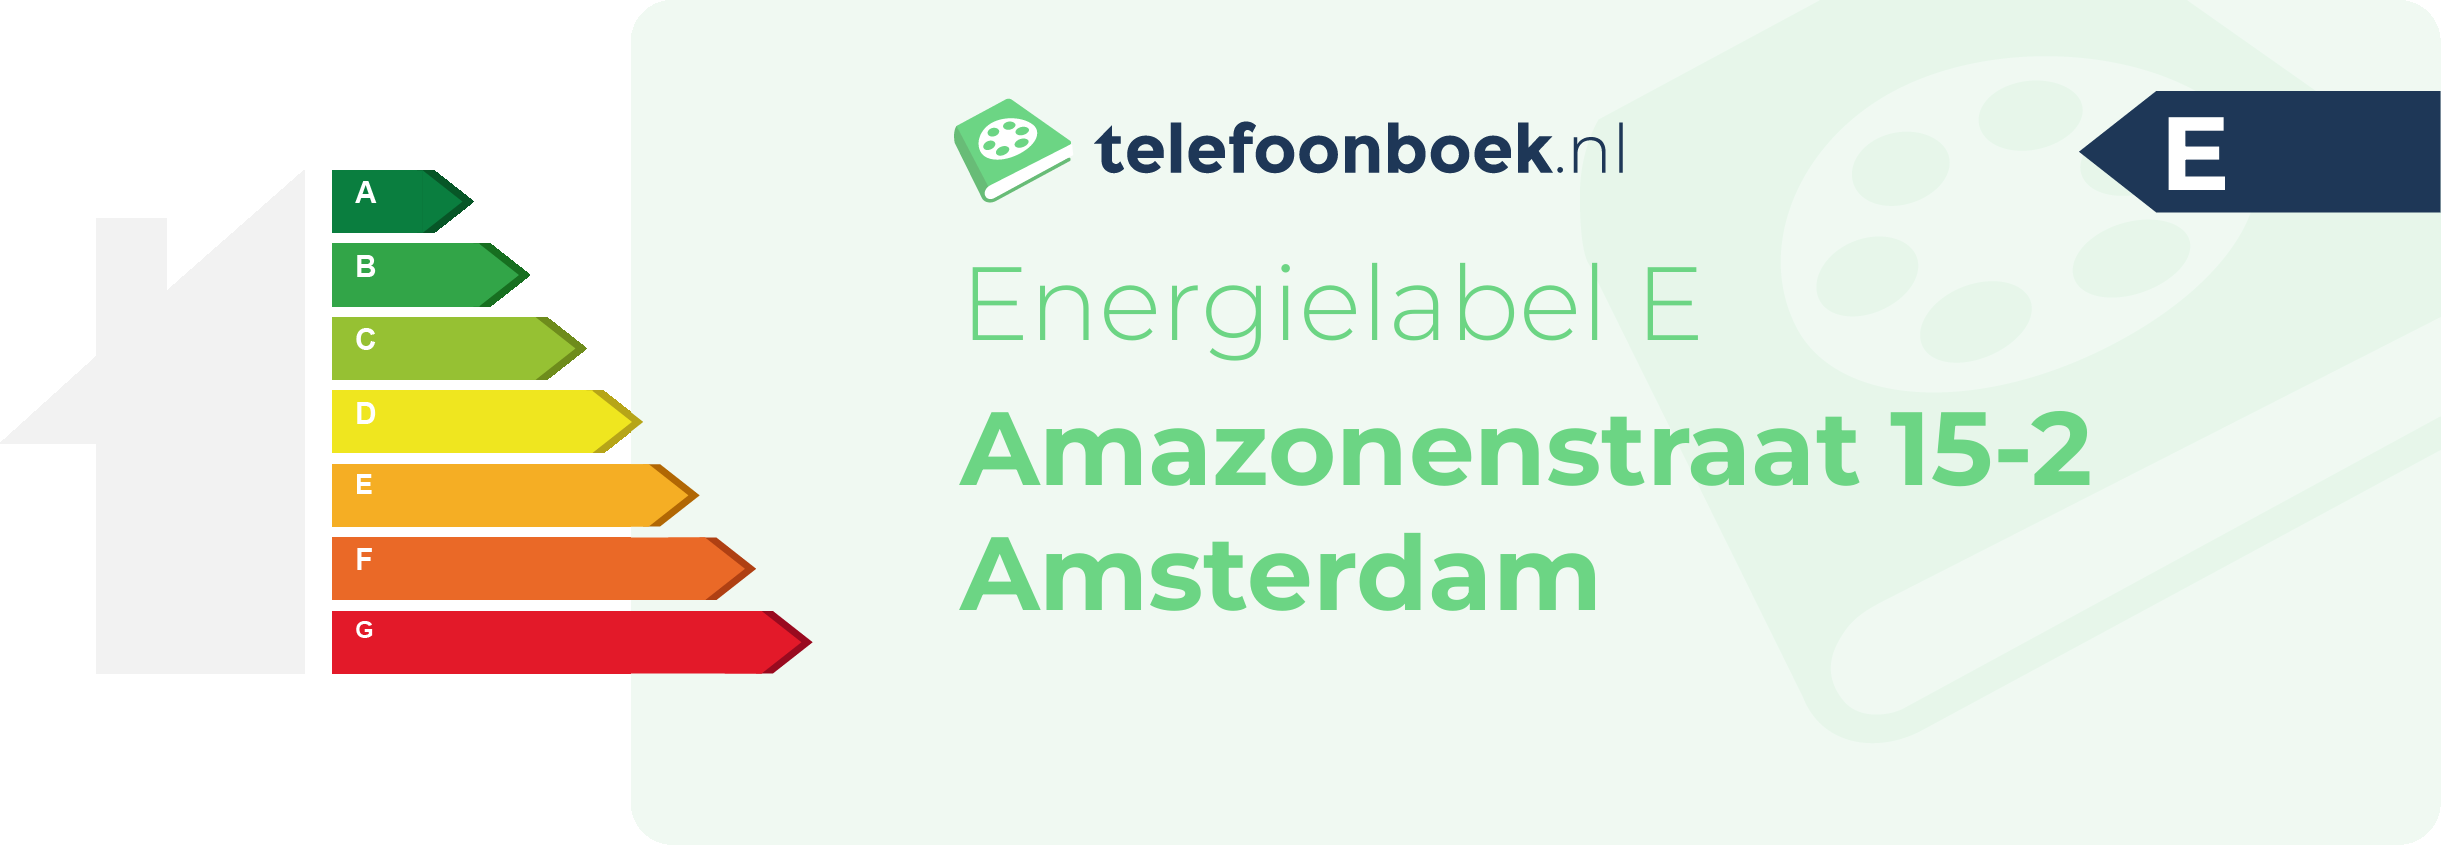 Energielabel Amazonenstraat 15-2 Amsterdam